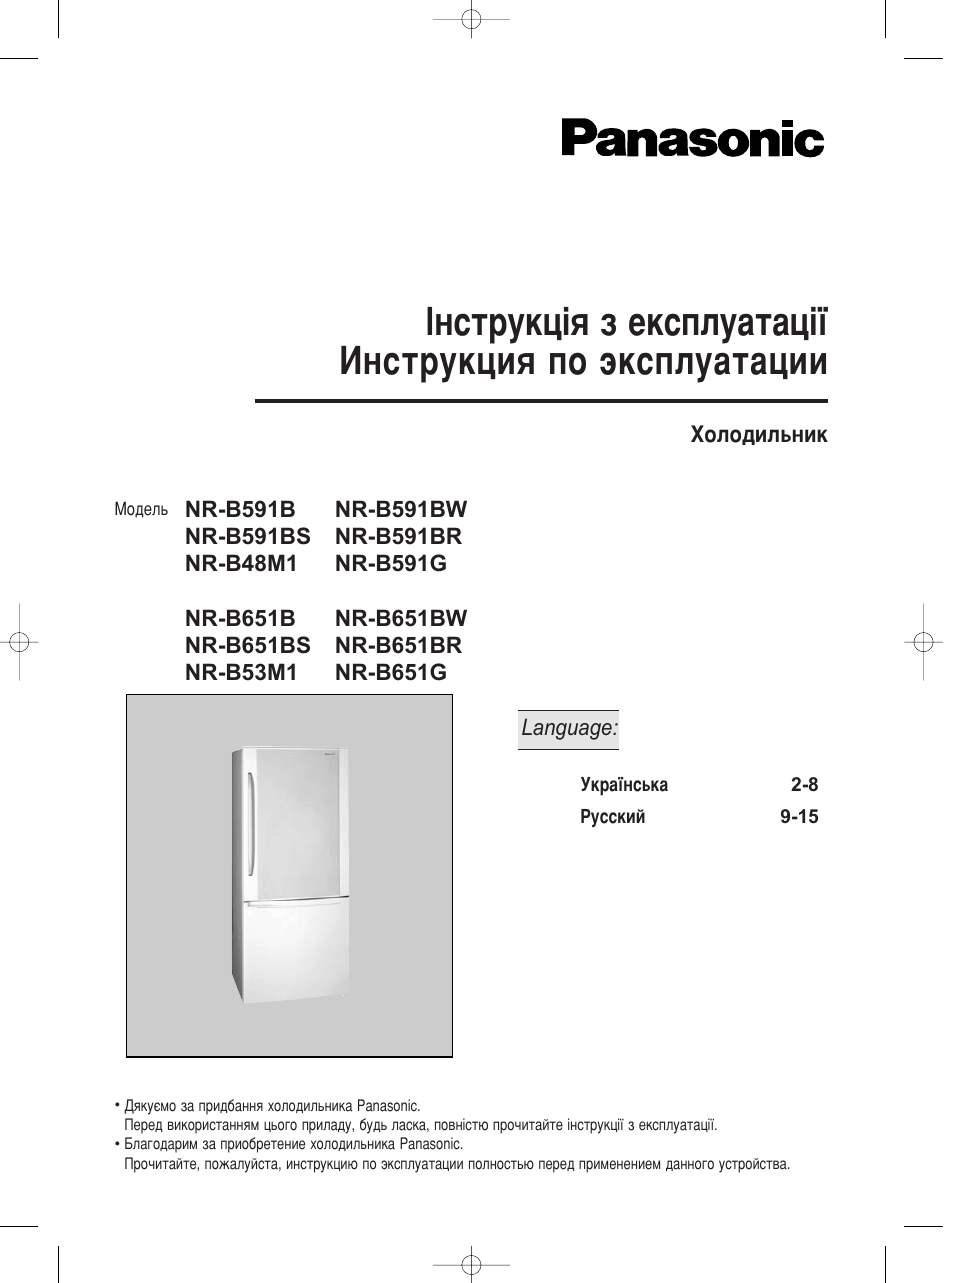 Инструкция по эксплуатации Panasonic NR-B53M1 | 15 страниц